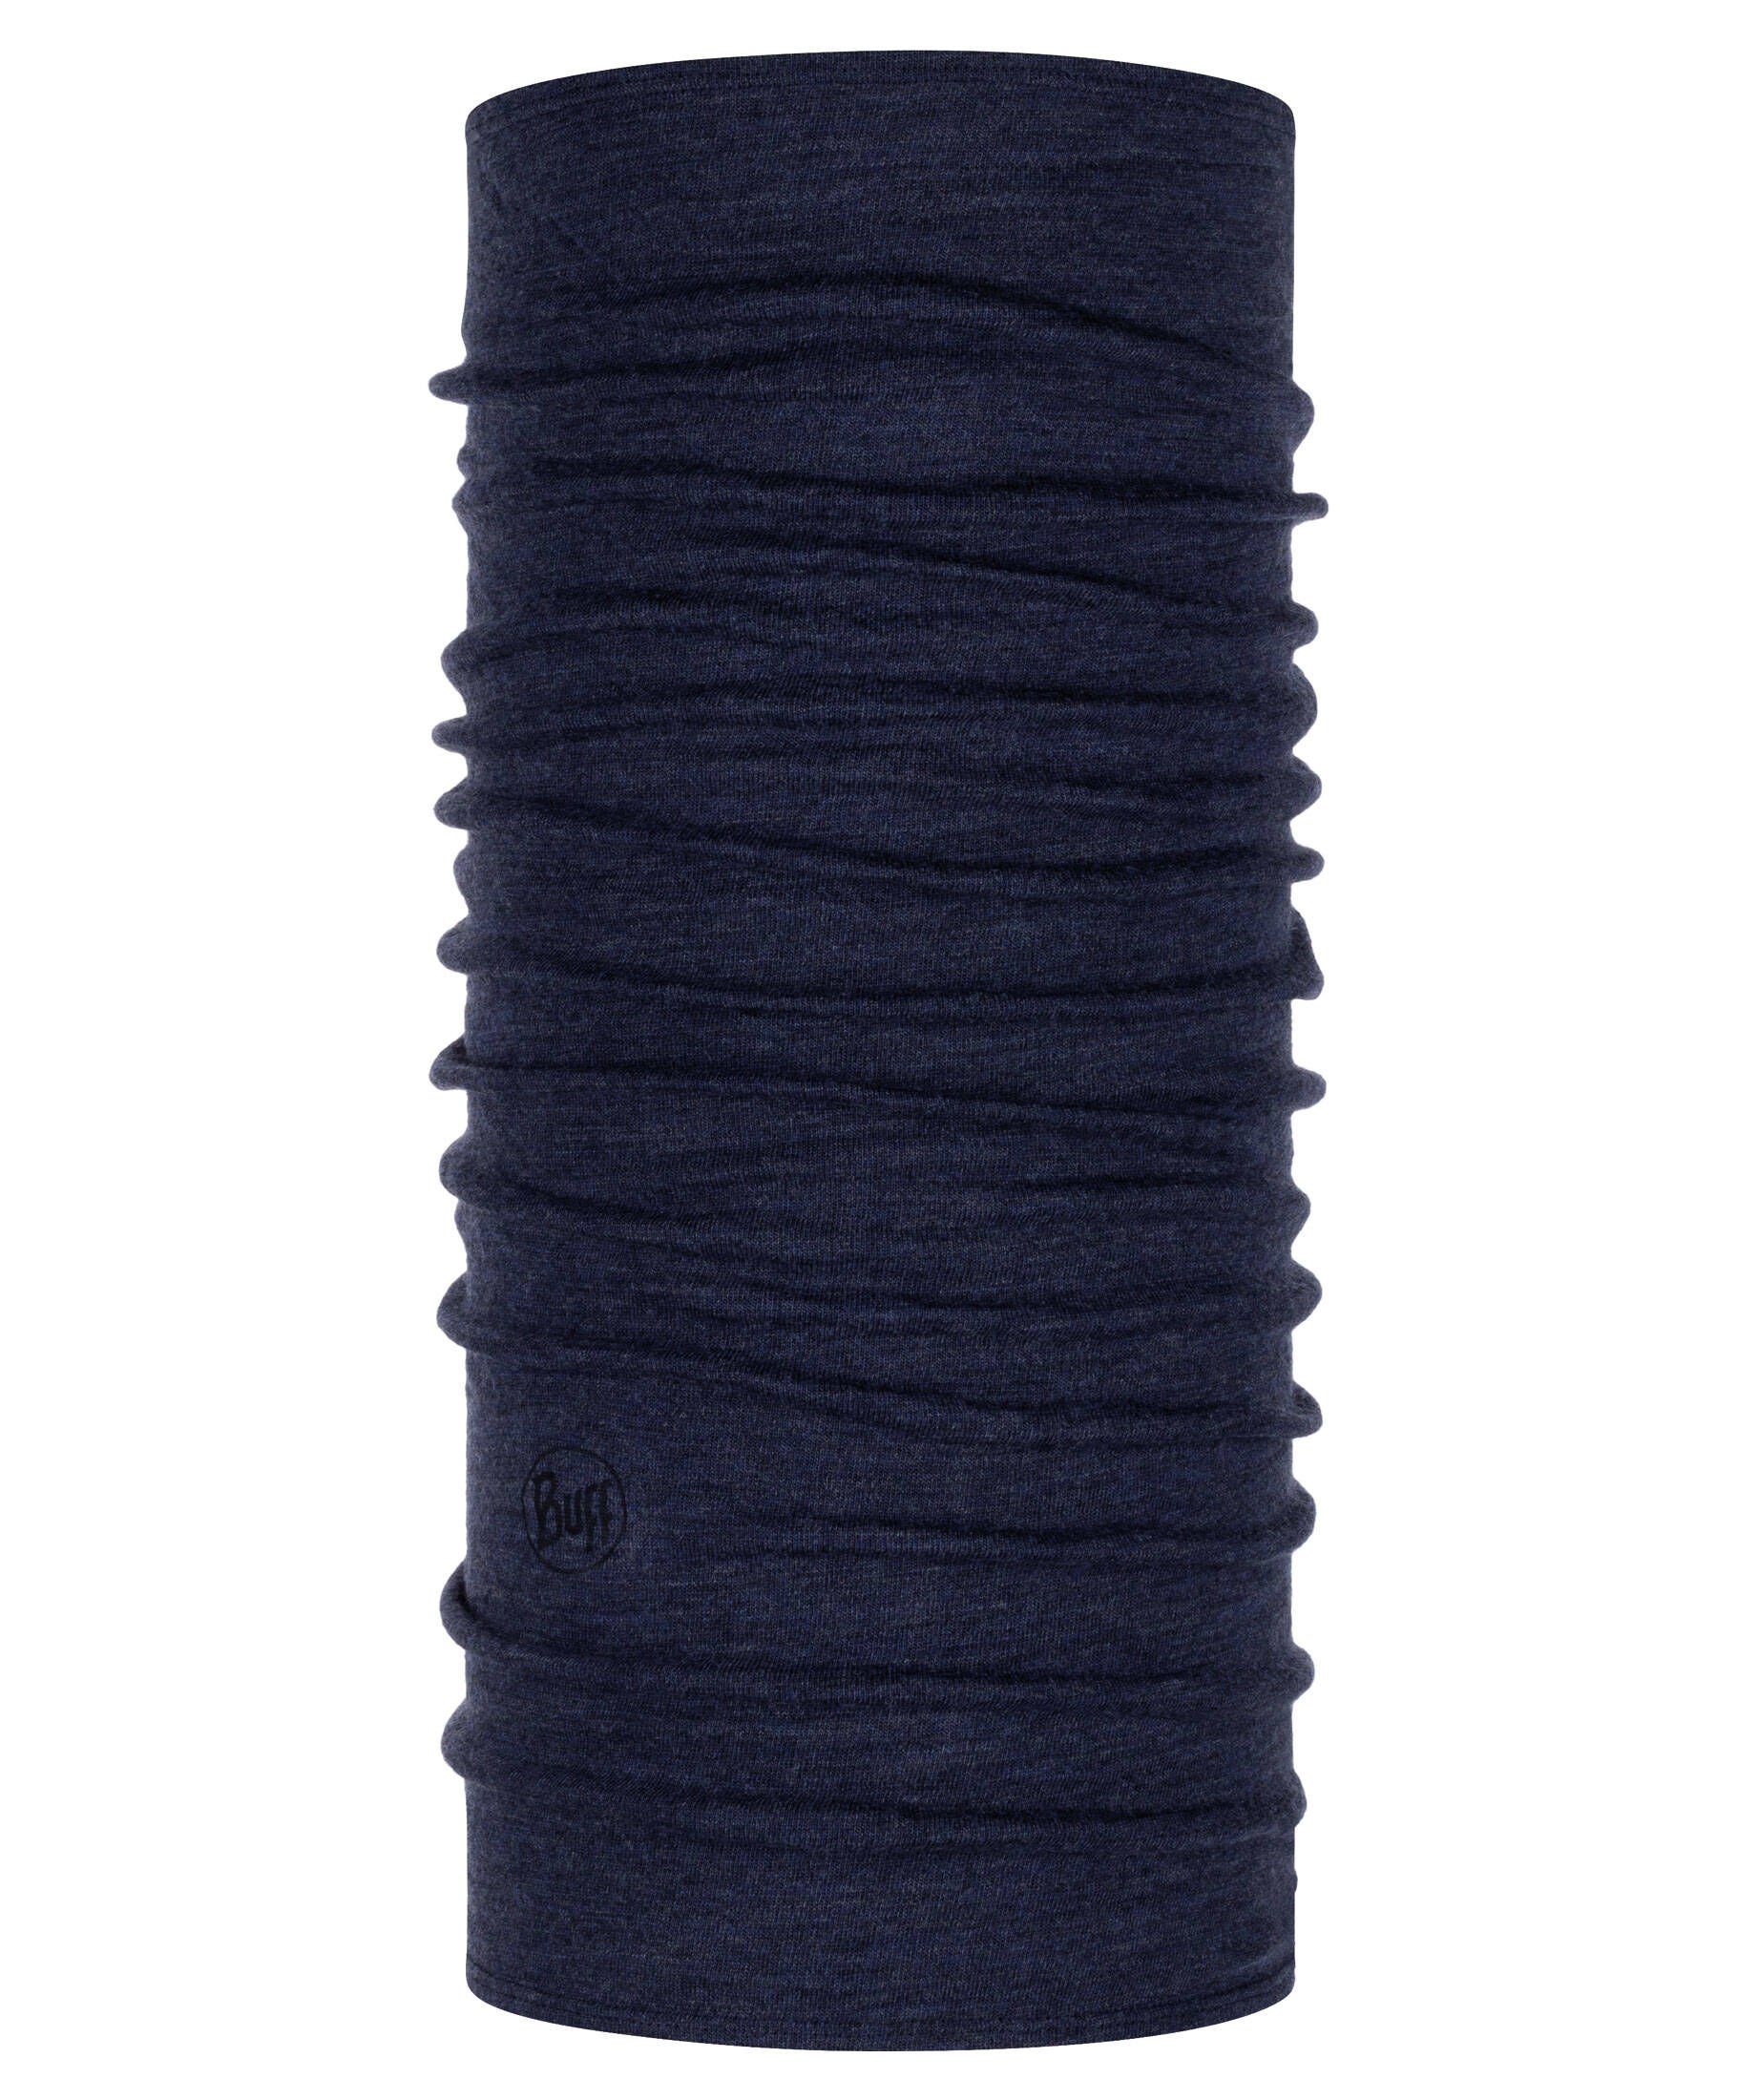 Buff Loop Multifunktionstuch "Midweight Merino Wool" nachtblau (301)